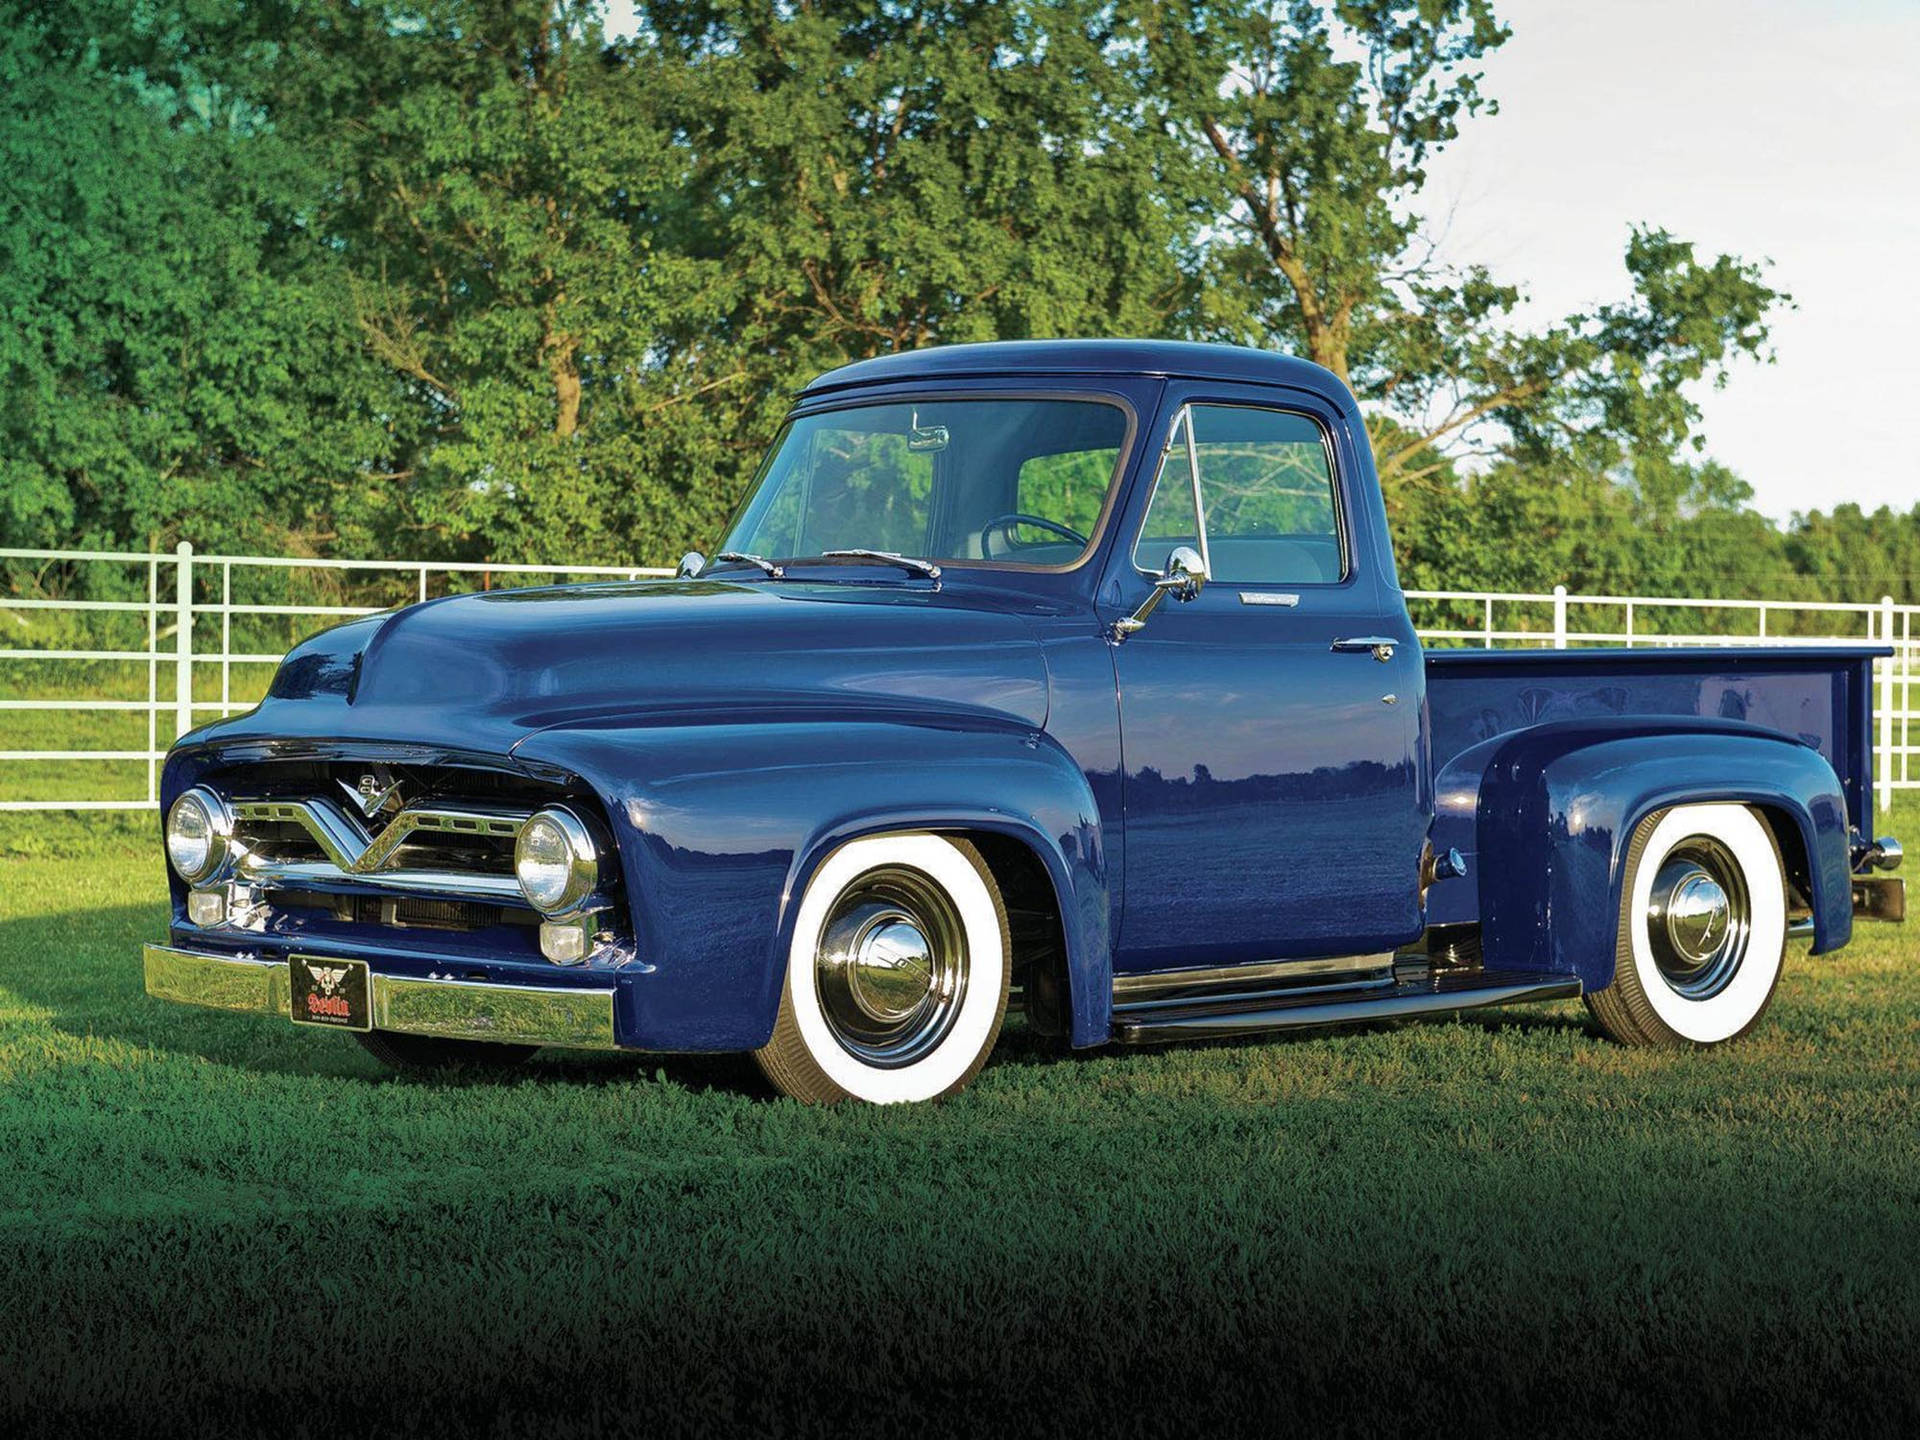 Metallic Blue Old Ford Truck Wallpaper